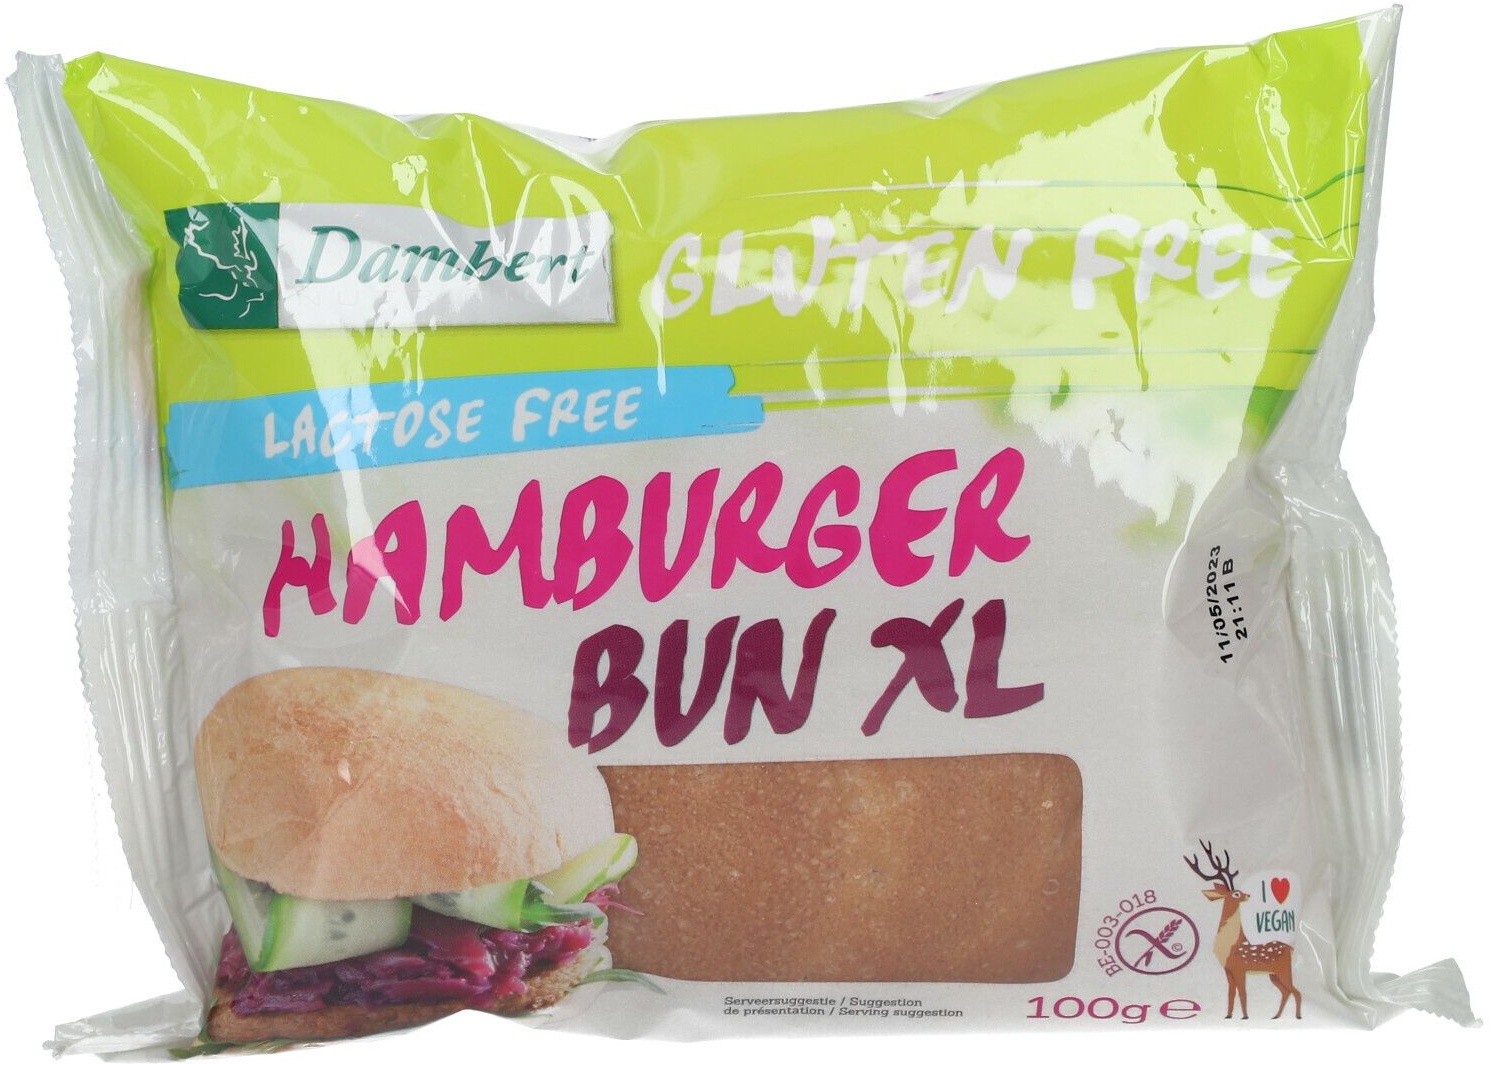 Damhert Pain Hamburger XL 100 g Aliment